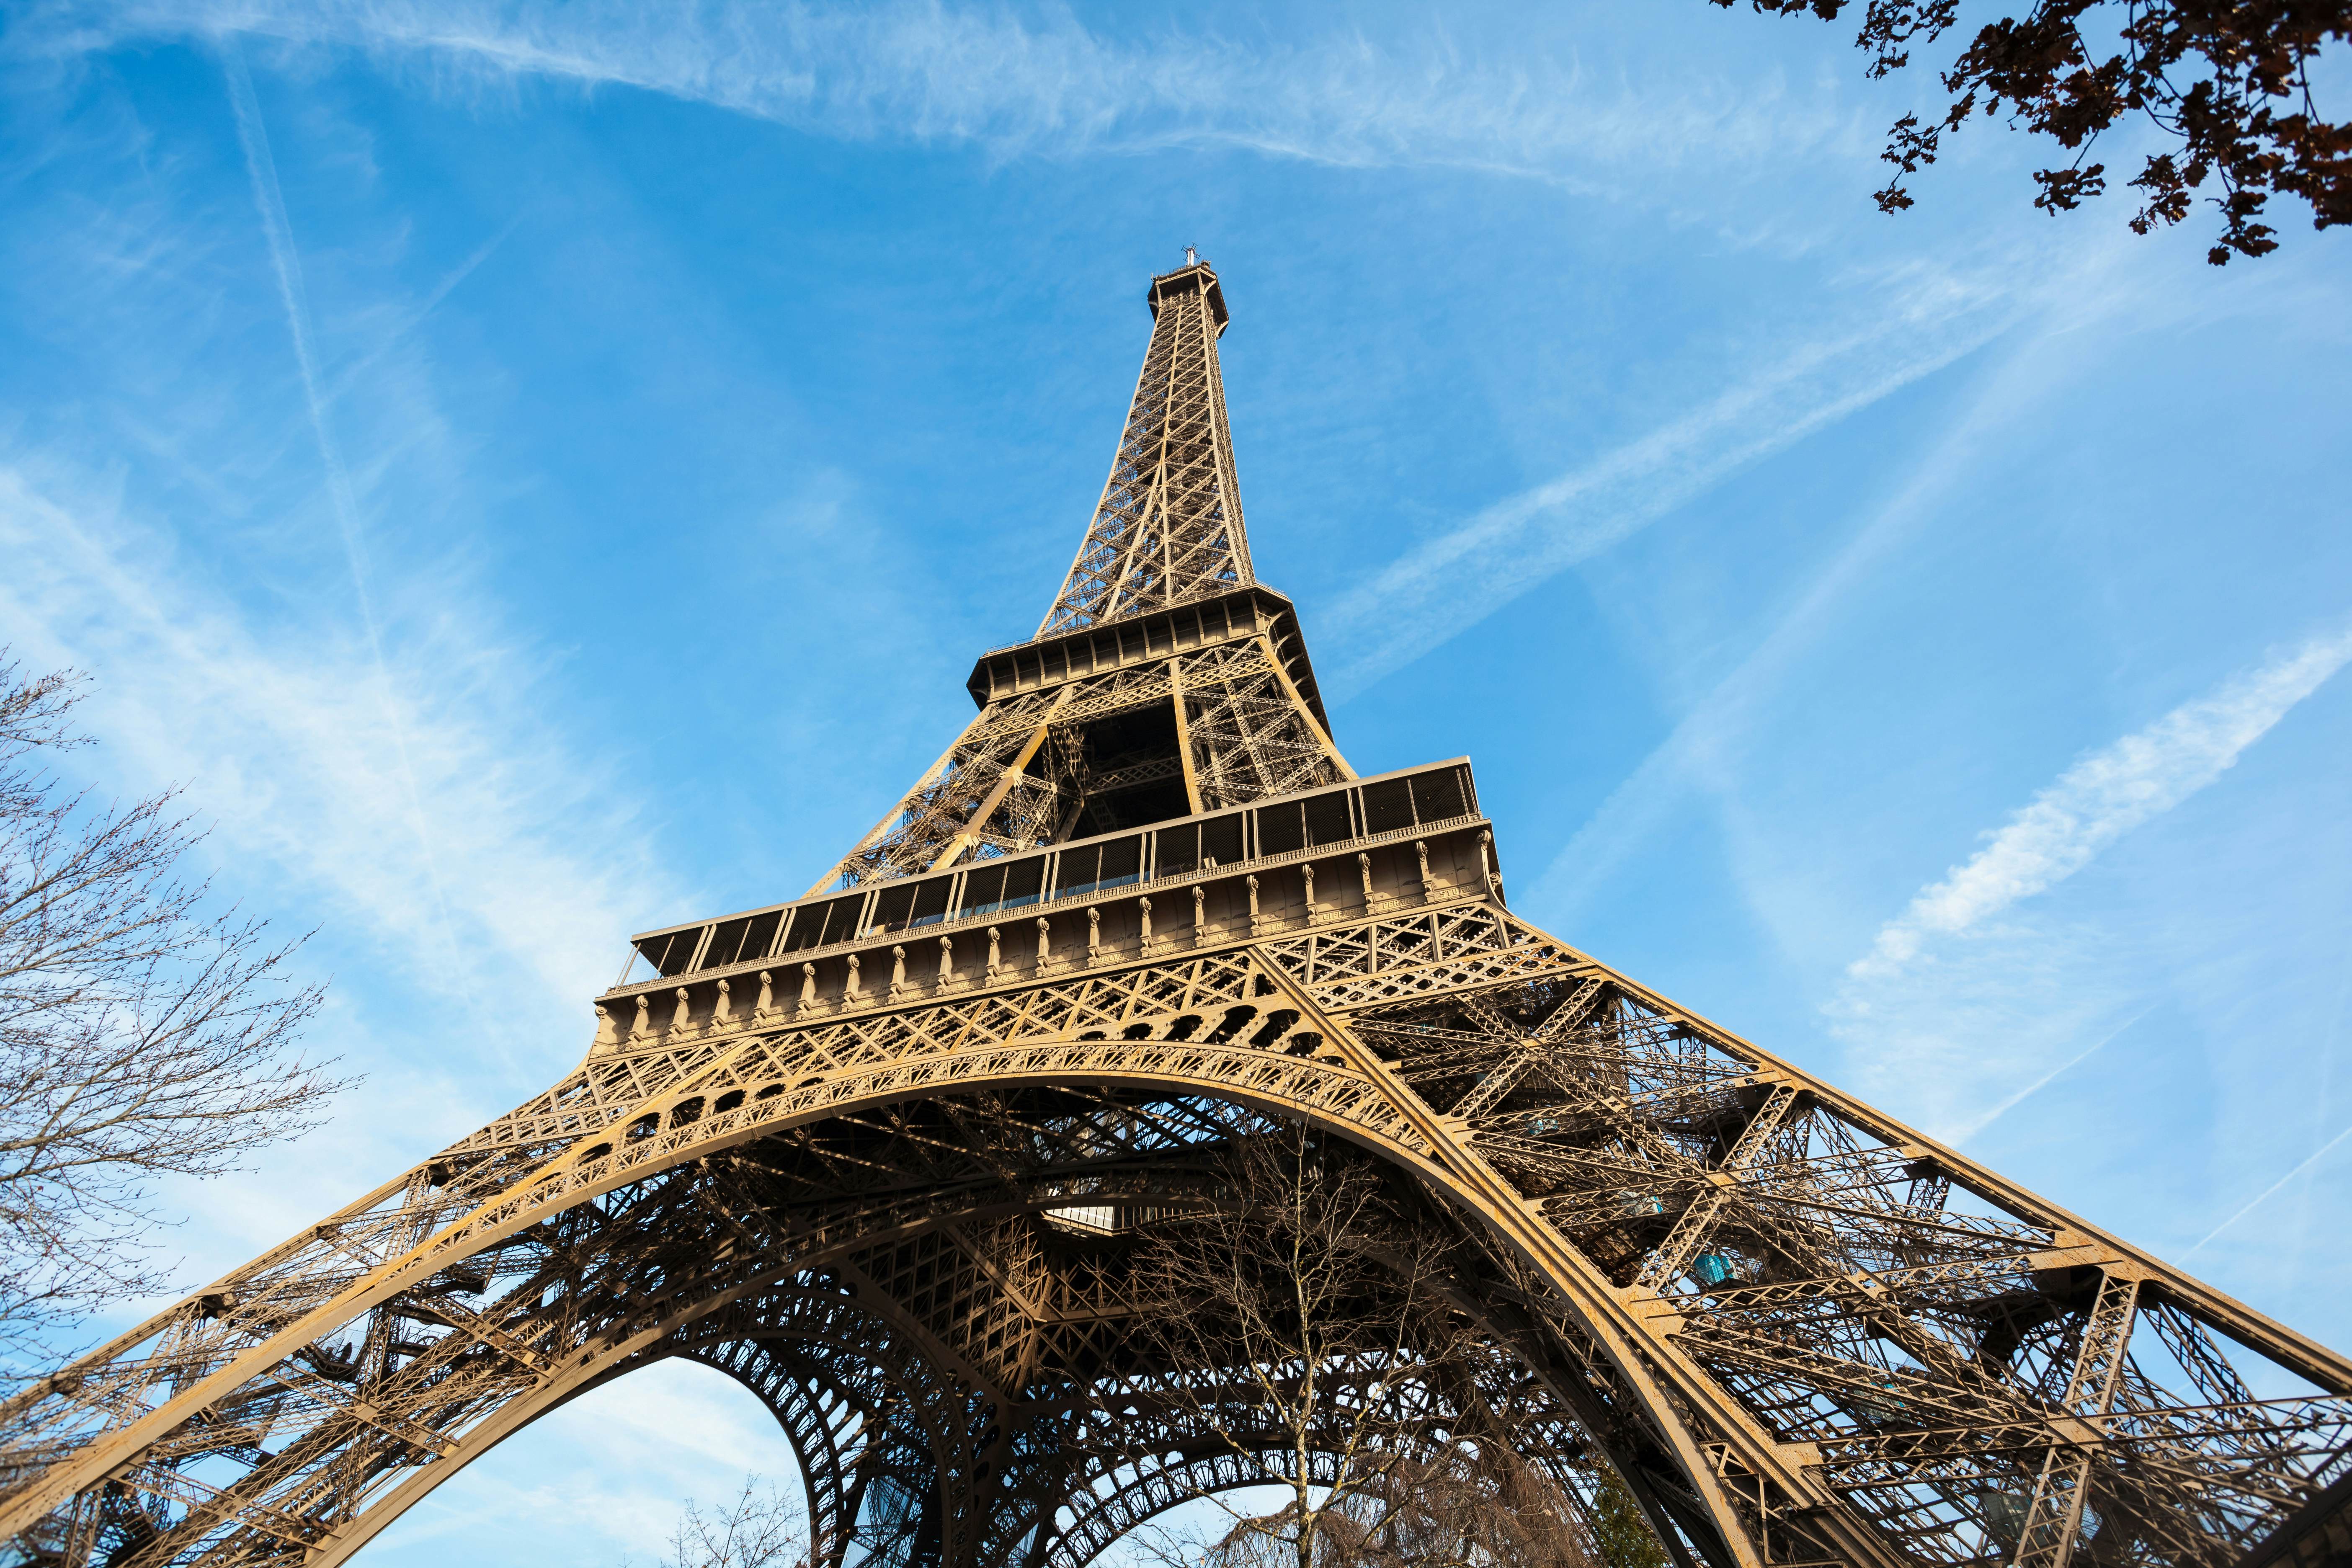 Paris travel - Lonely Planet